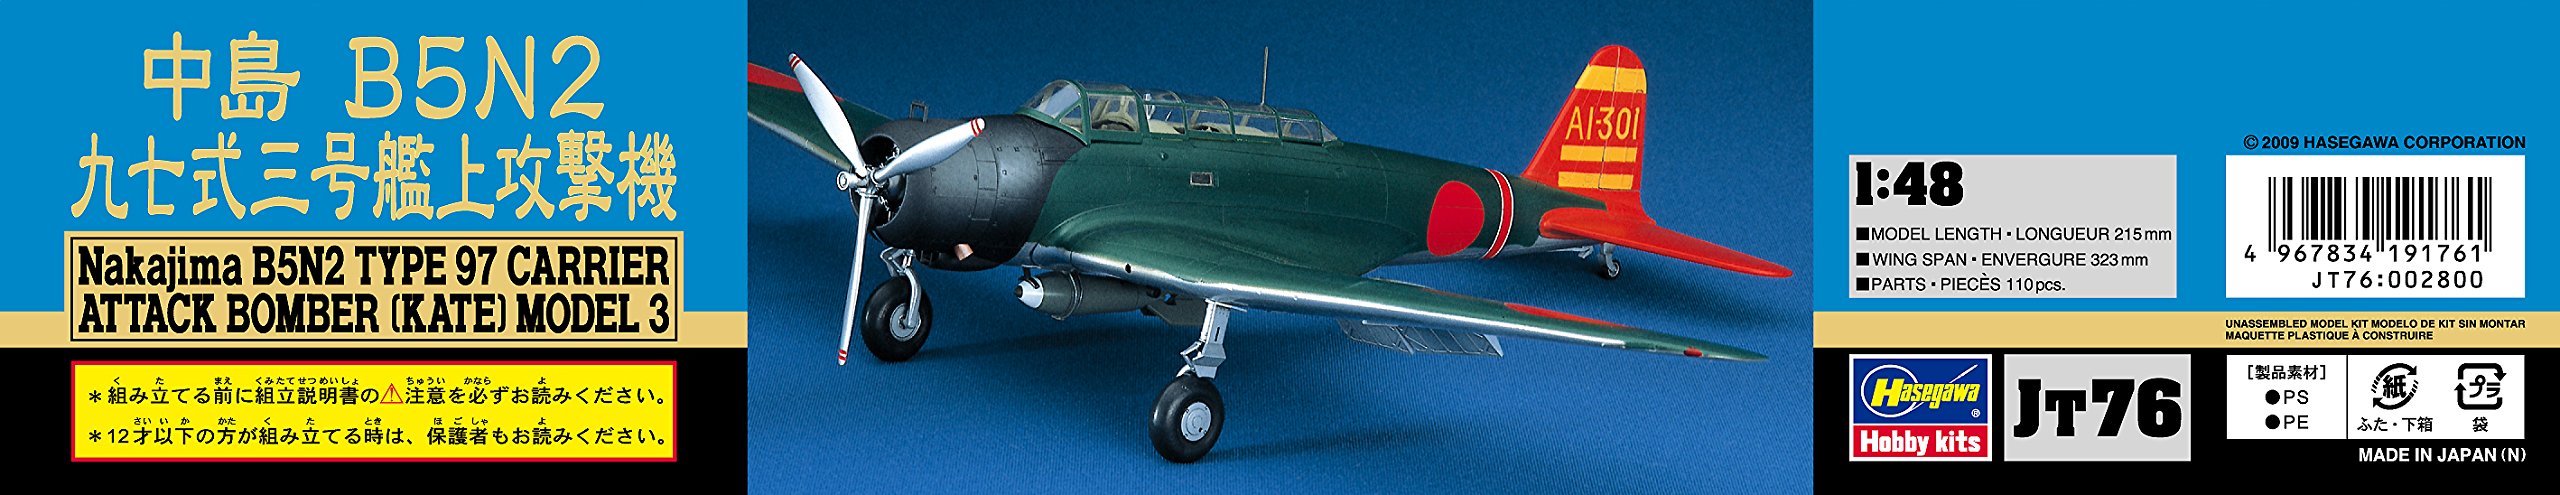 HASEGAWA 1/48 Nakajima B5N2 Type 97 porte-avions d'attaque Kate modèle 3 modèle en plastique